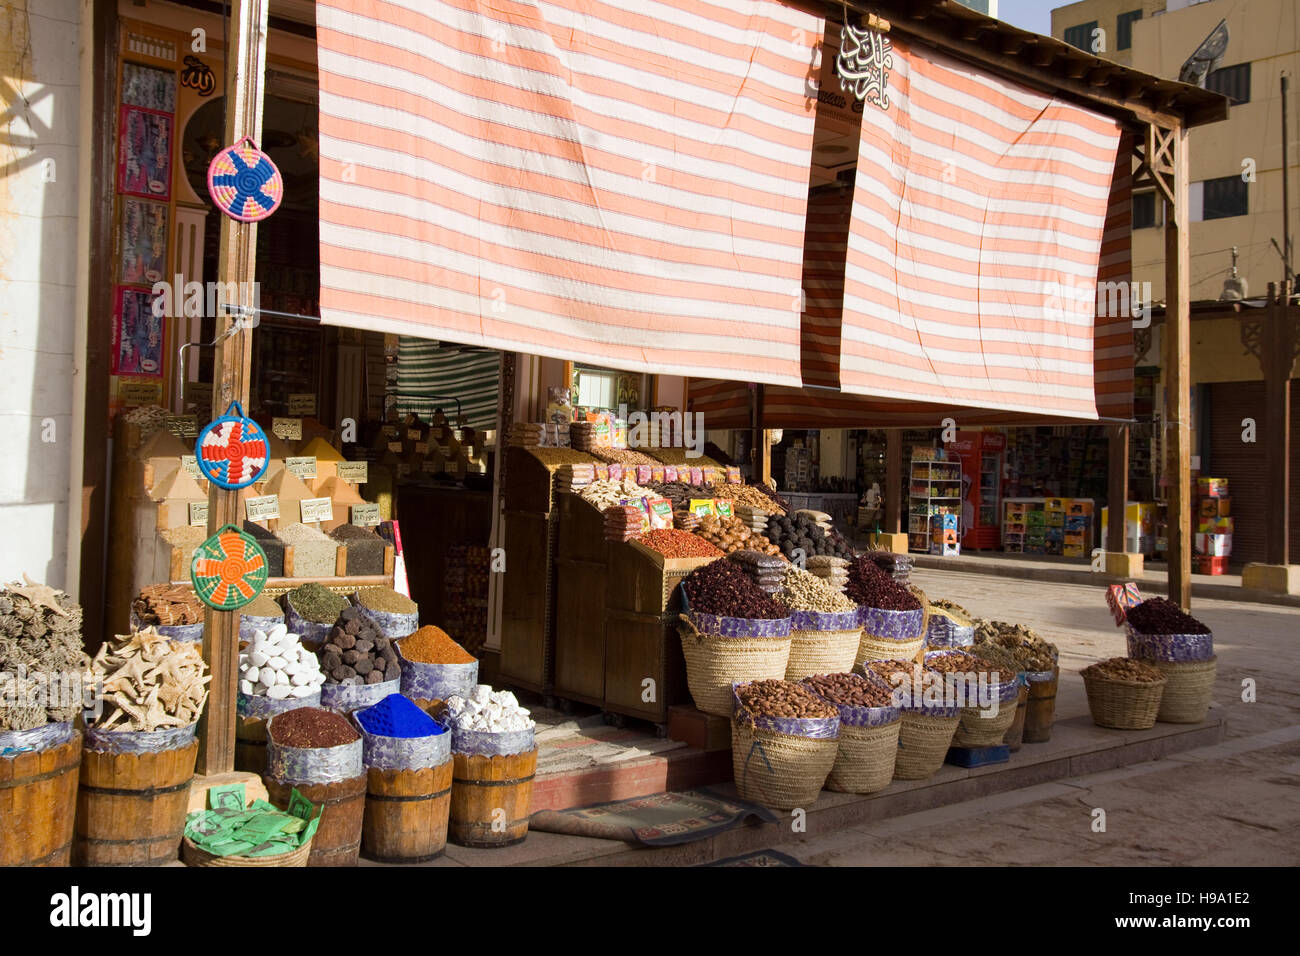 aswan market, spice on display Stock Photo